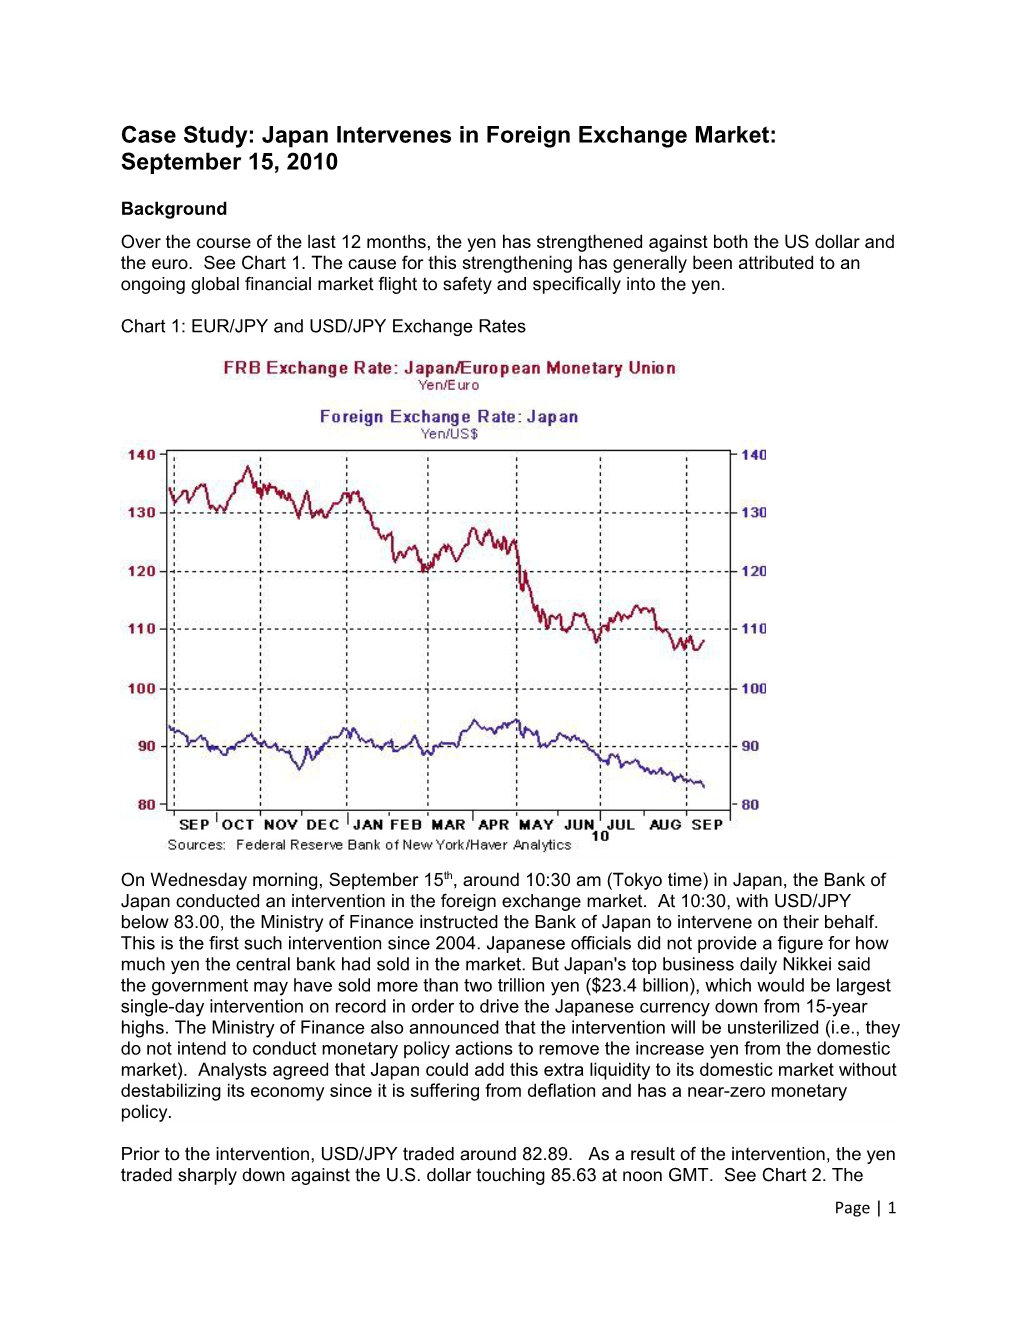 Case Study: Japan Intervenes in Foreign Exchange Market: September 15, 2010